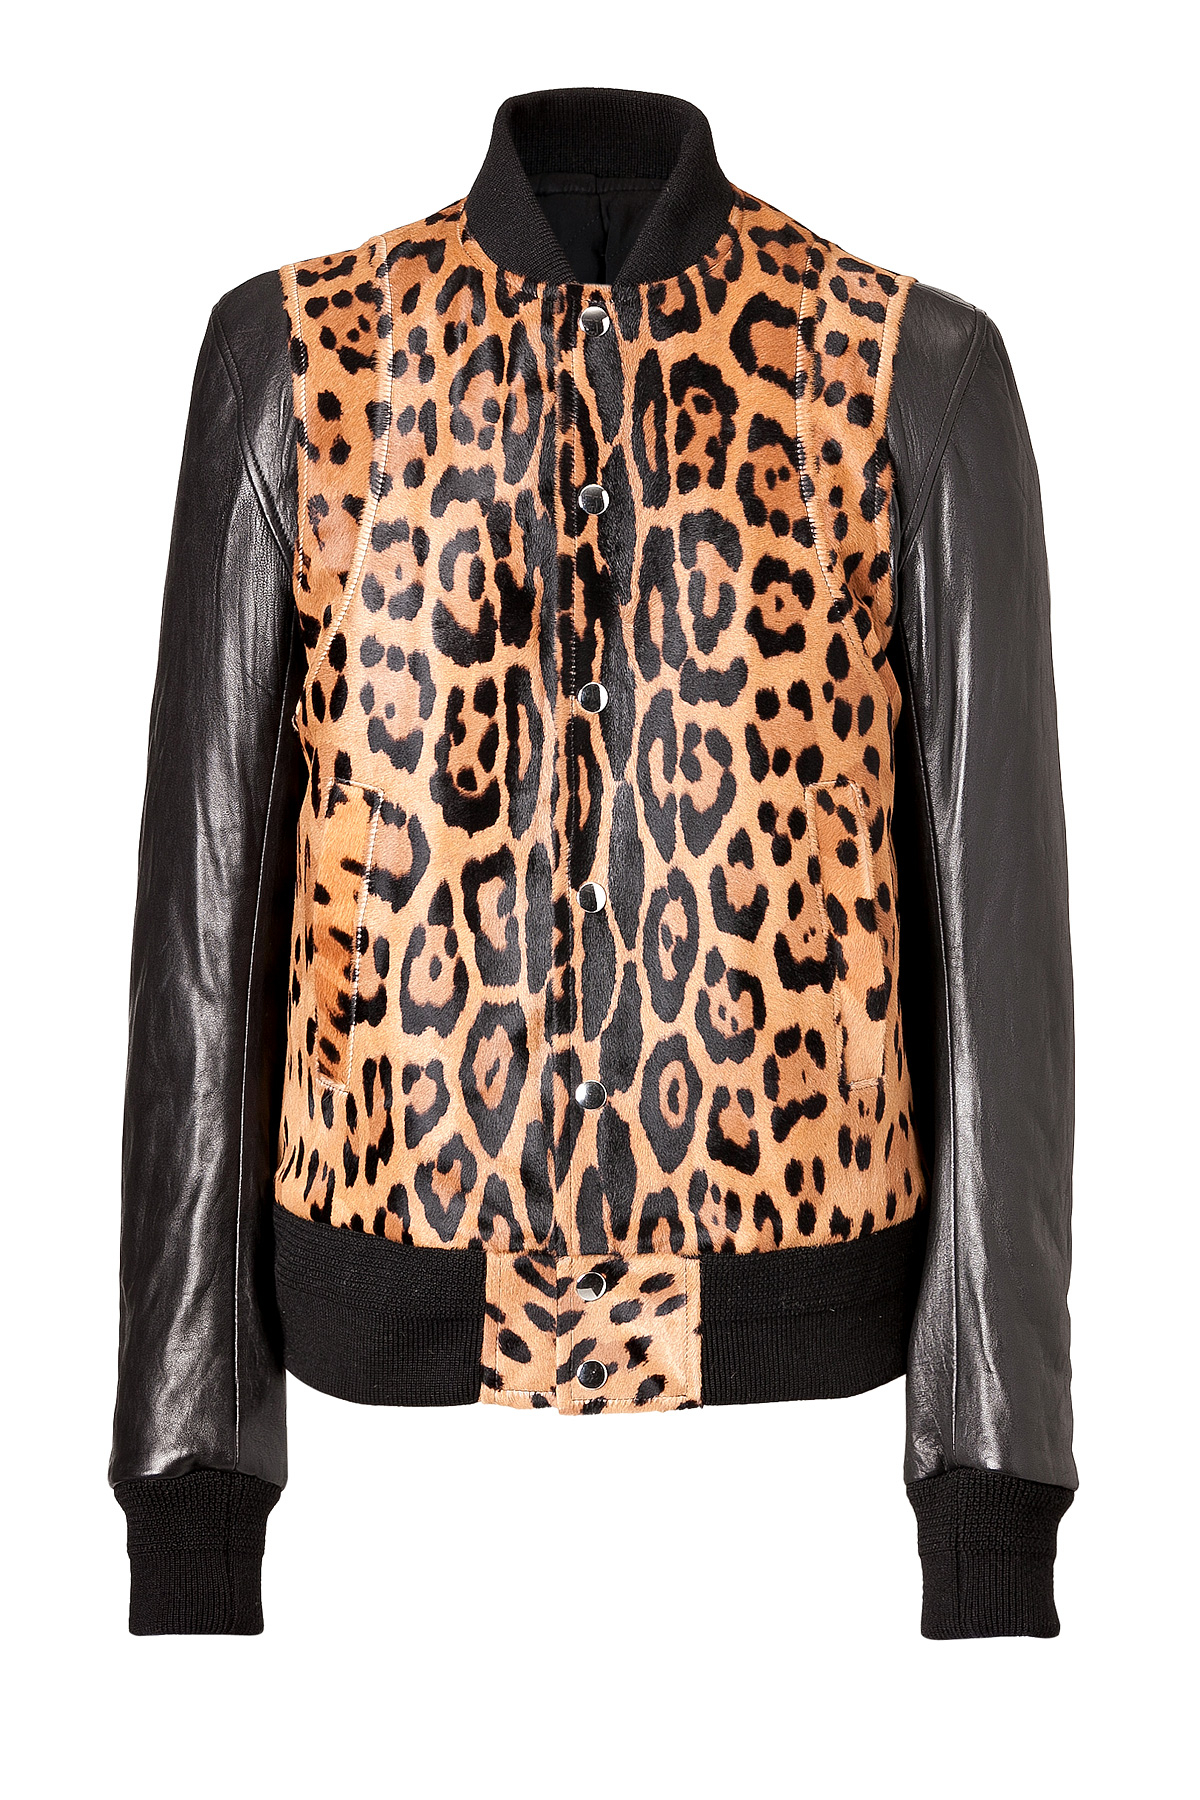 Balmain Leopard-print Bomber Jacket for Men | Lyst